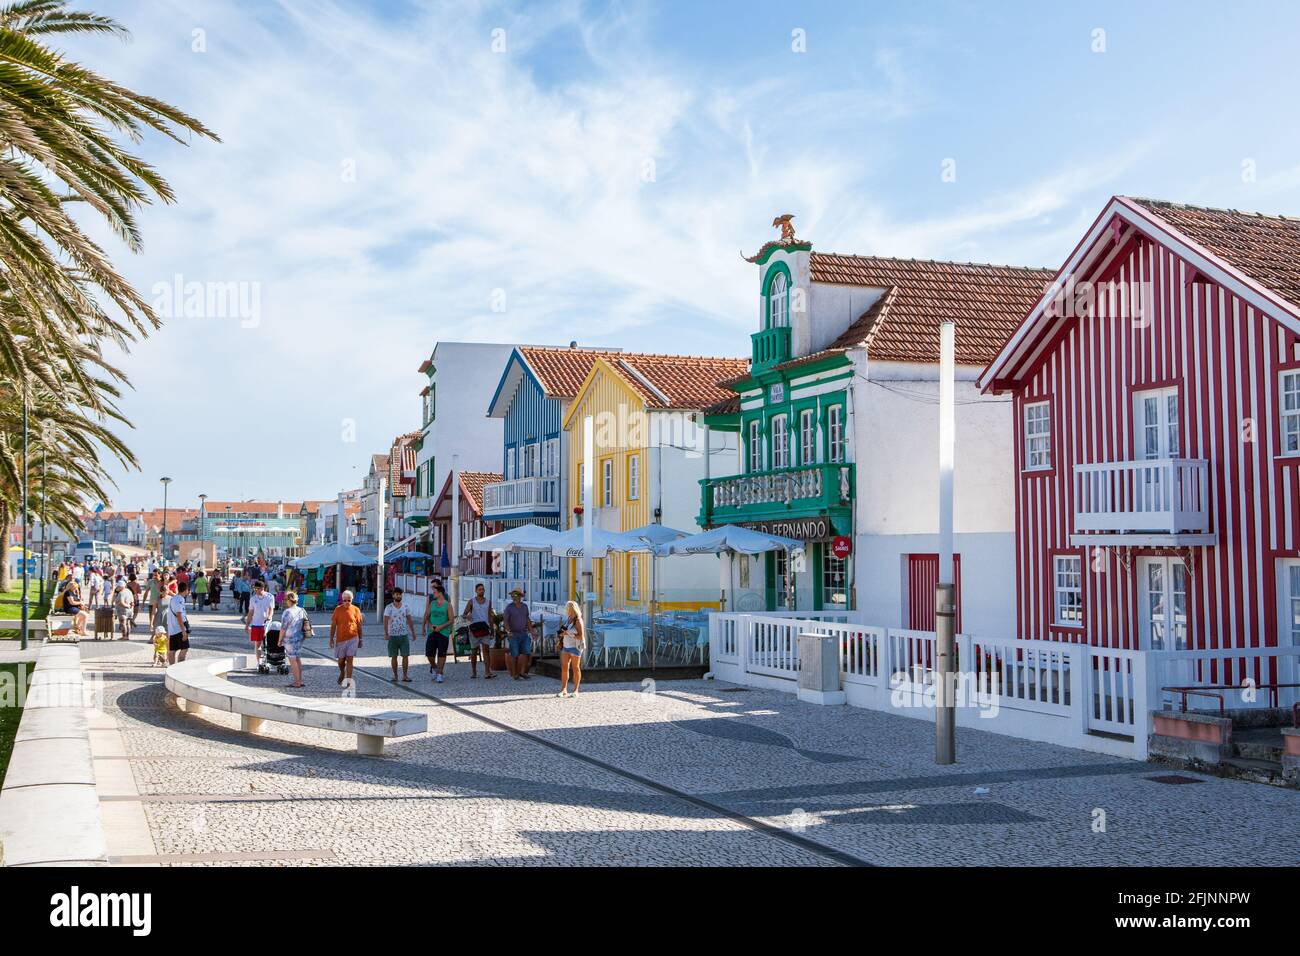 Maisons colorées typiques de la Costa Nova, Aveiro, Portugal. Banque D'Images